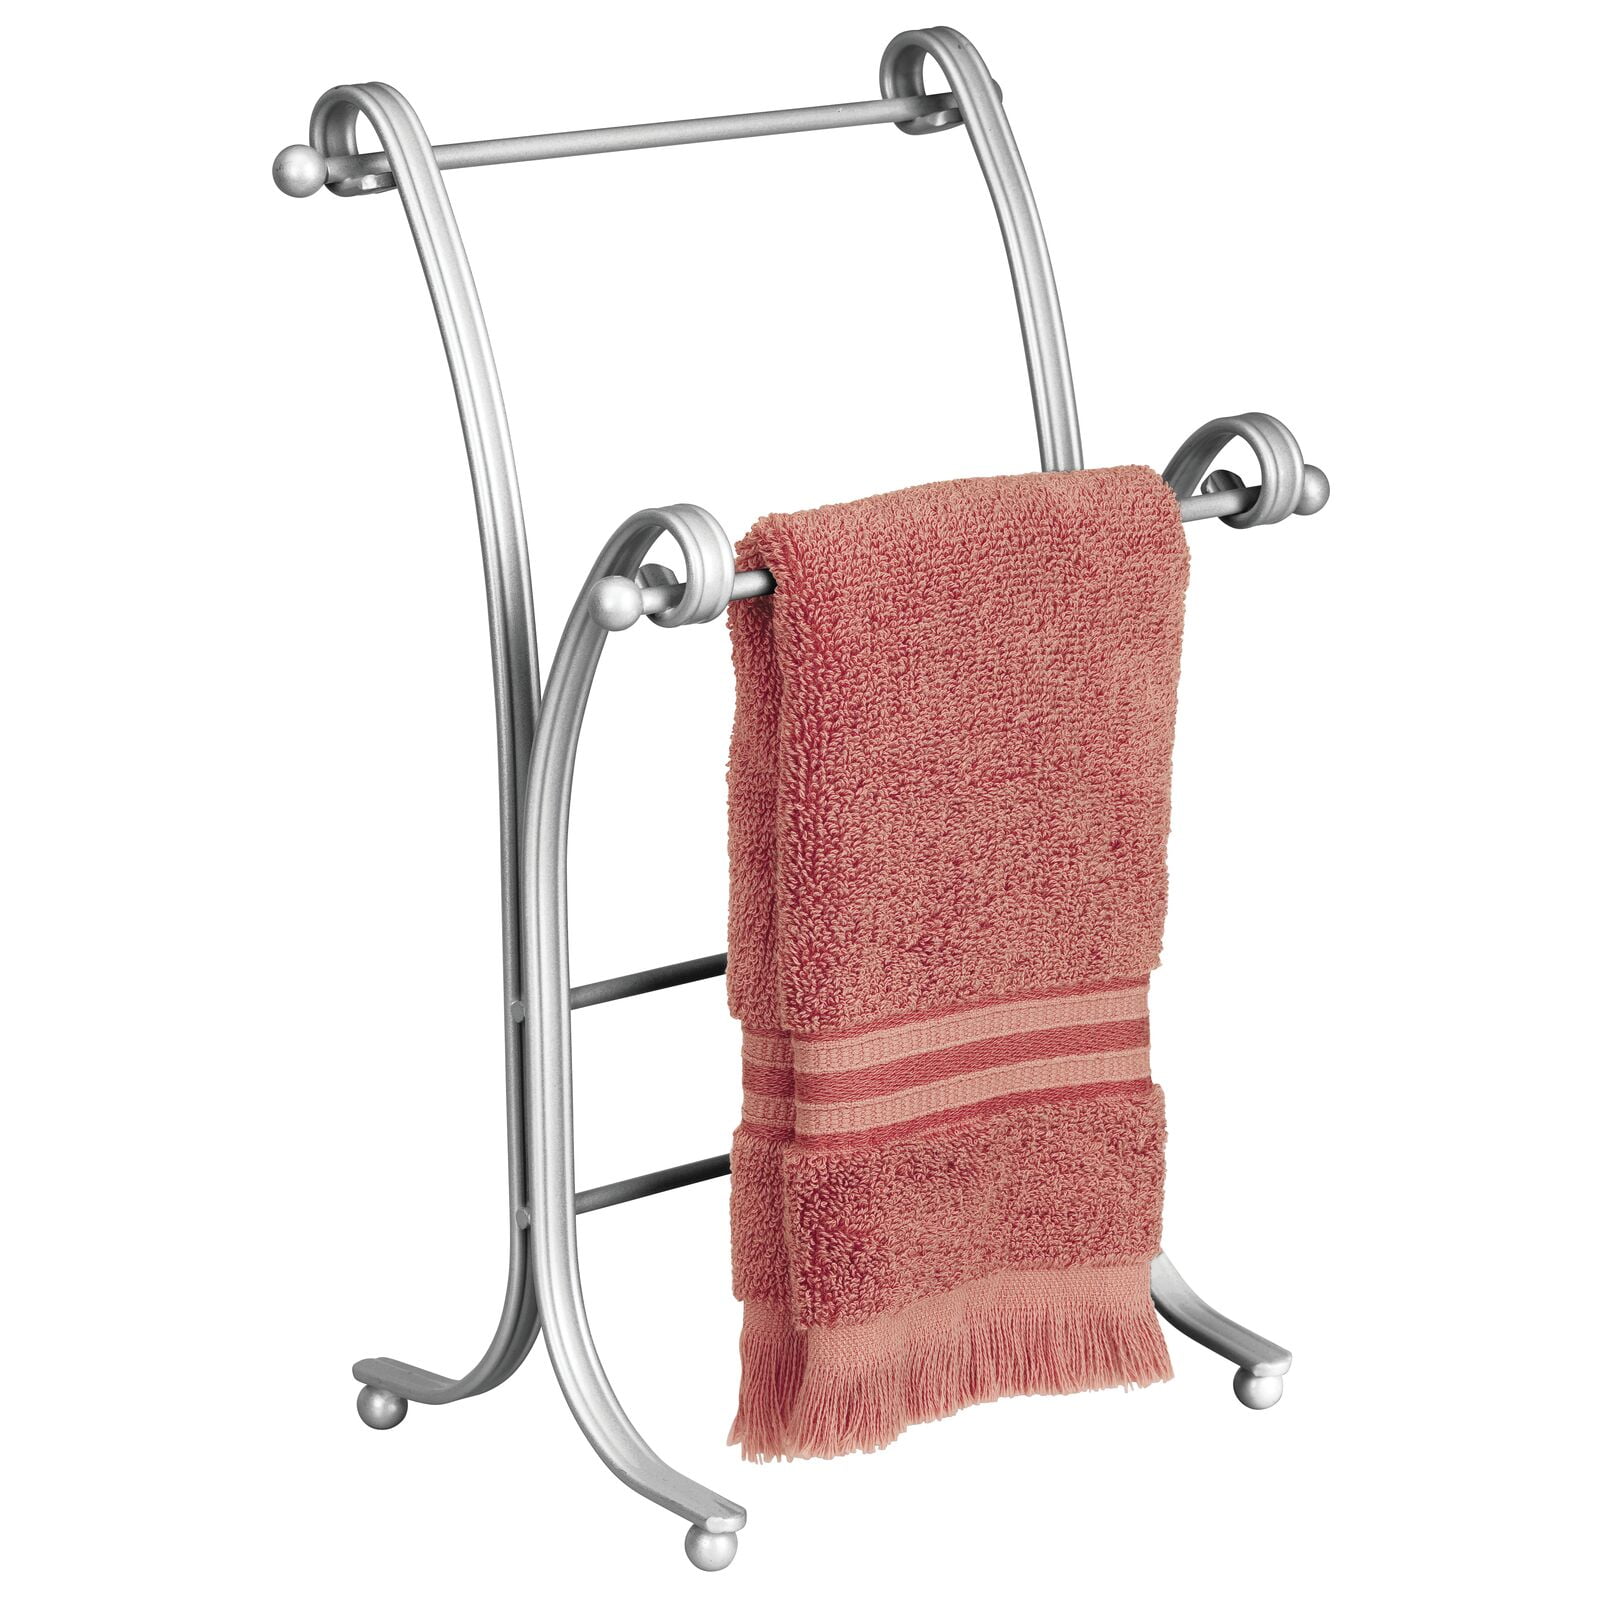 mDesign Stainless Adhesive Bathroom Towel Holder Bar/Rack- 2 Pack